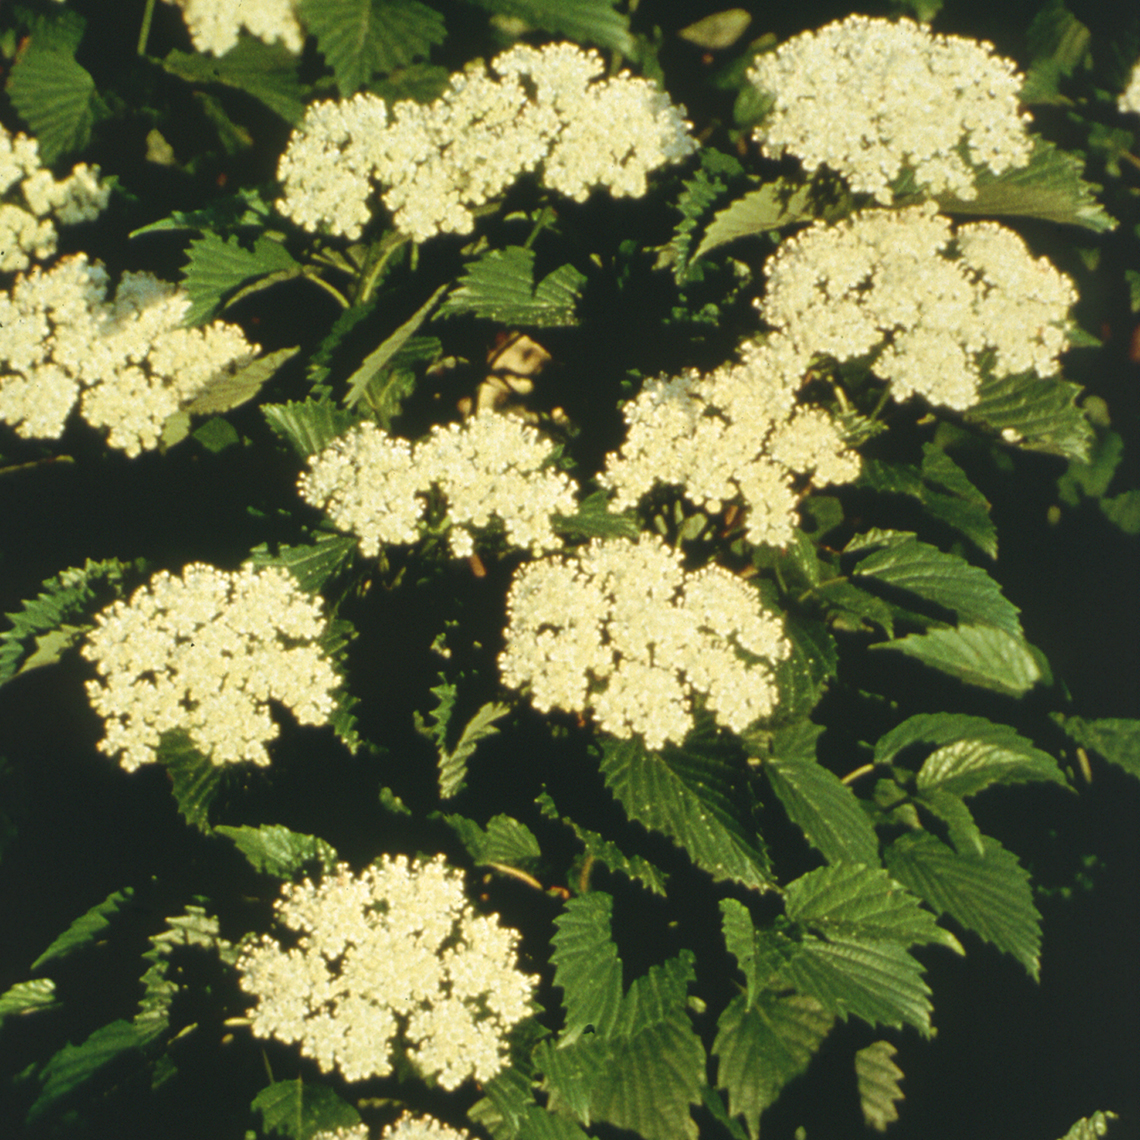 Ralph Senior viburnum with white flower clusters on it